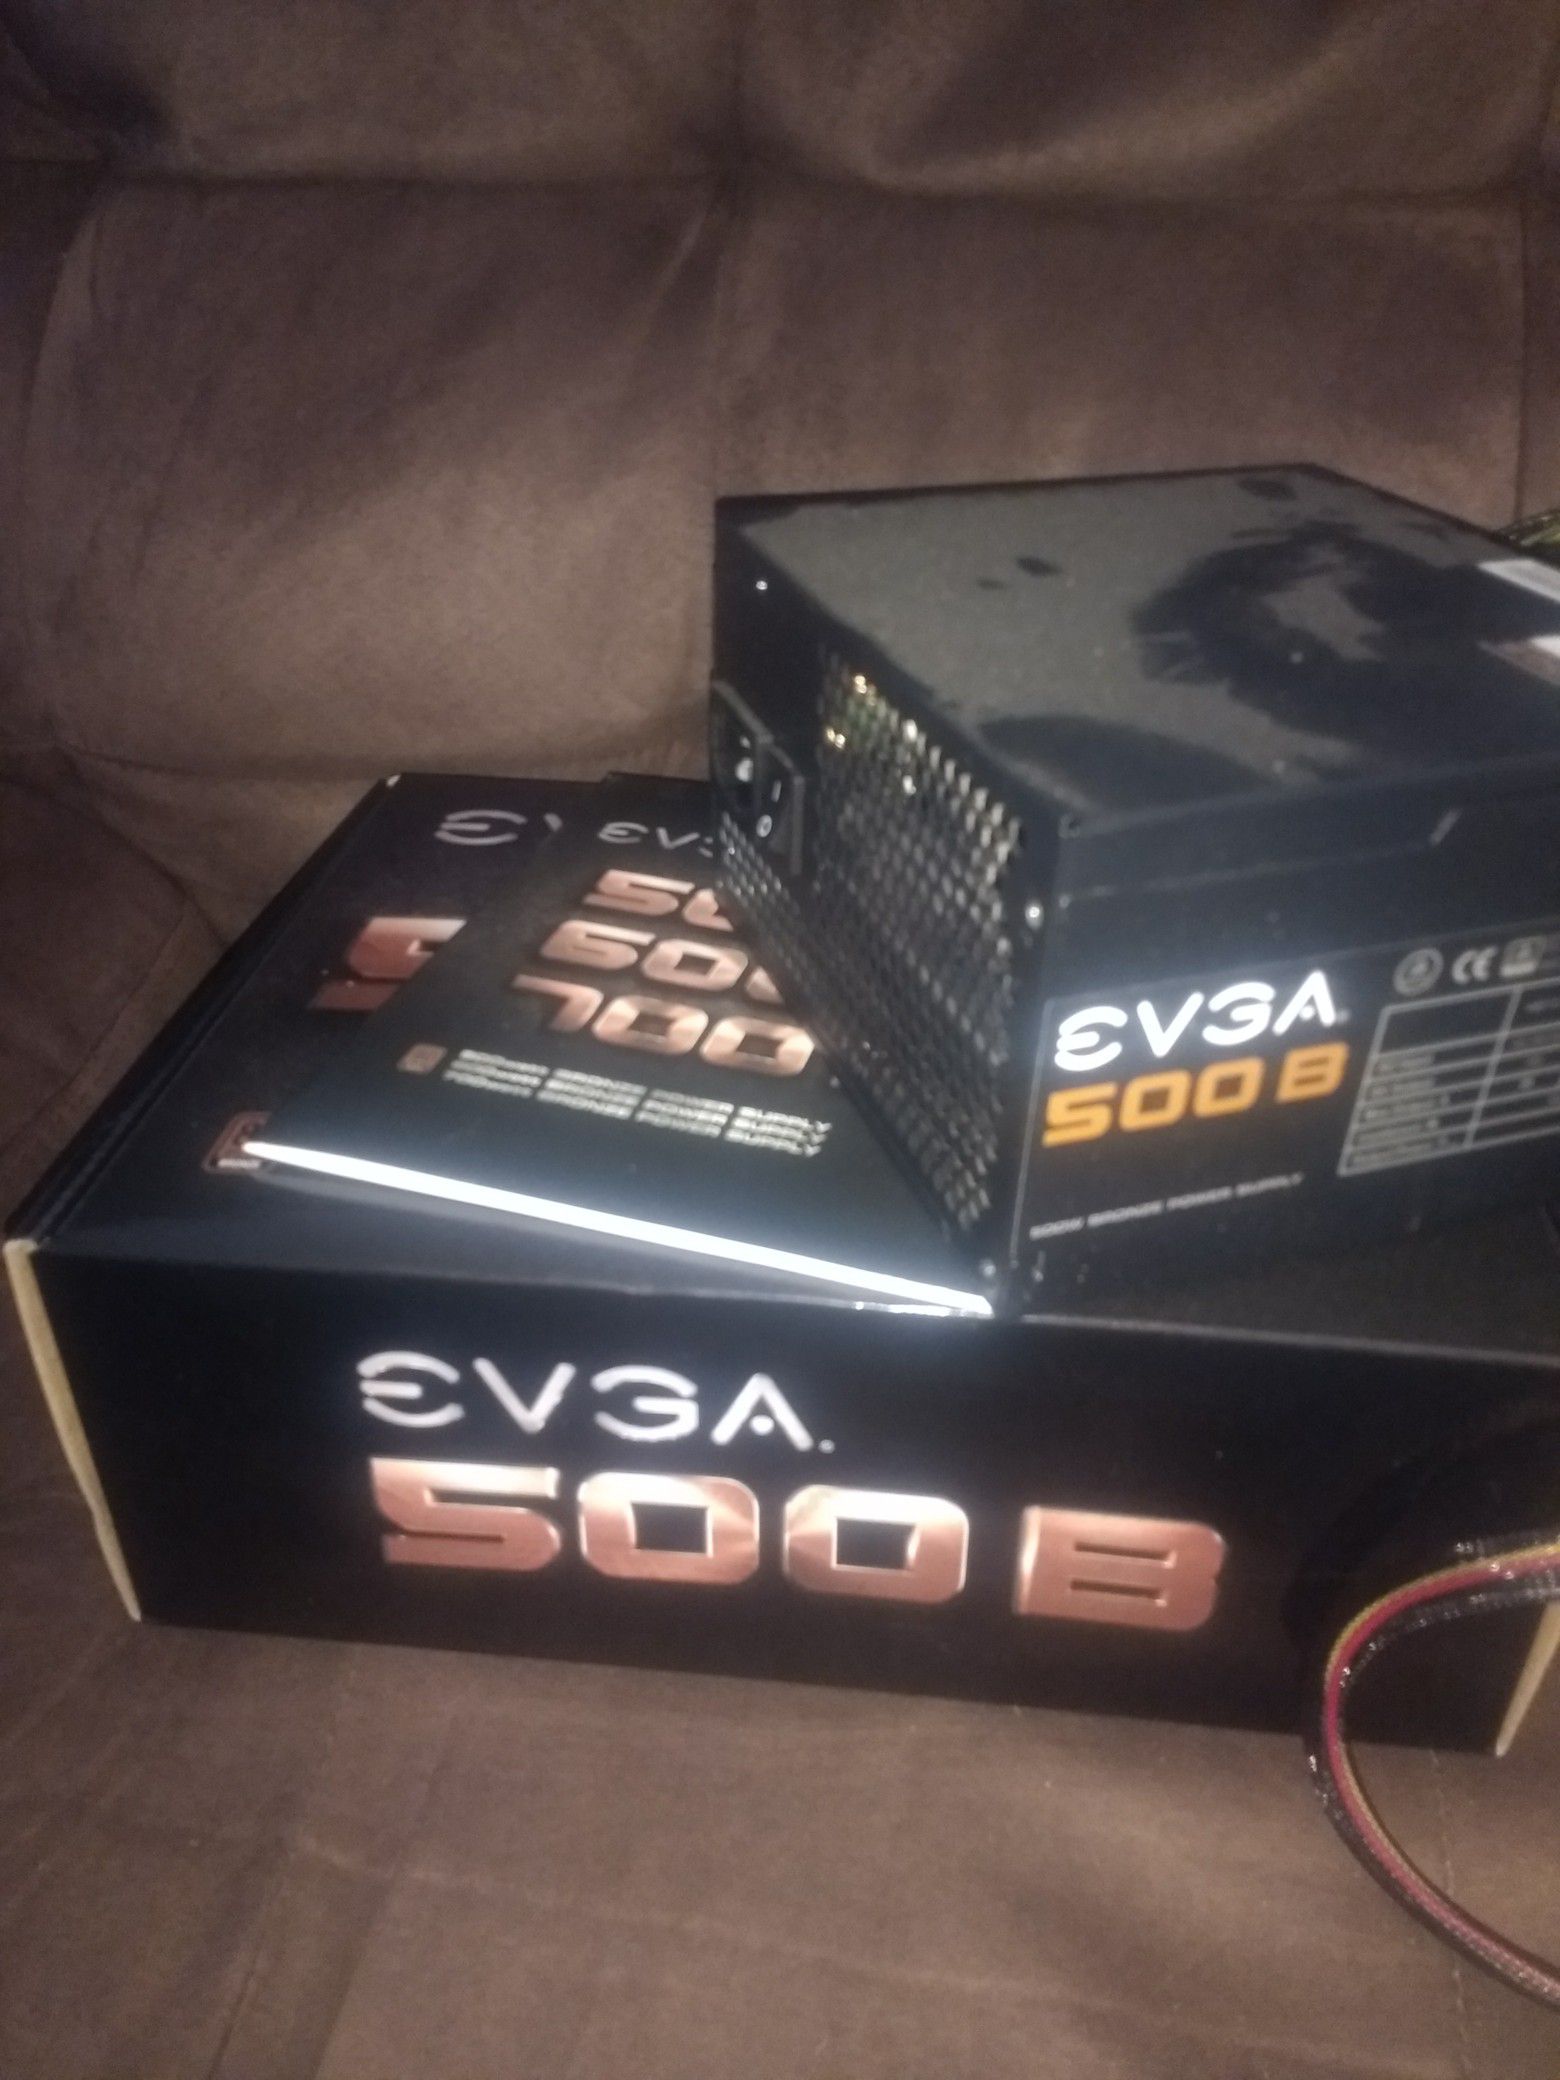 EVGA 500B 80+ Bronze Power Supply.